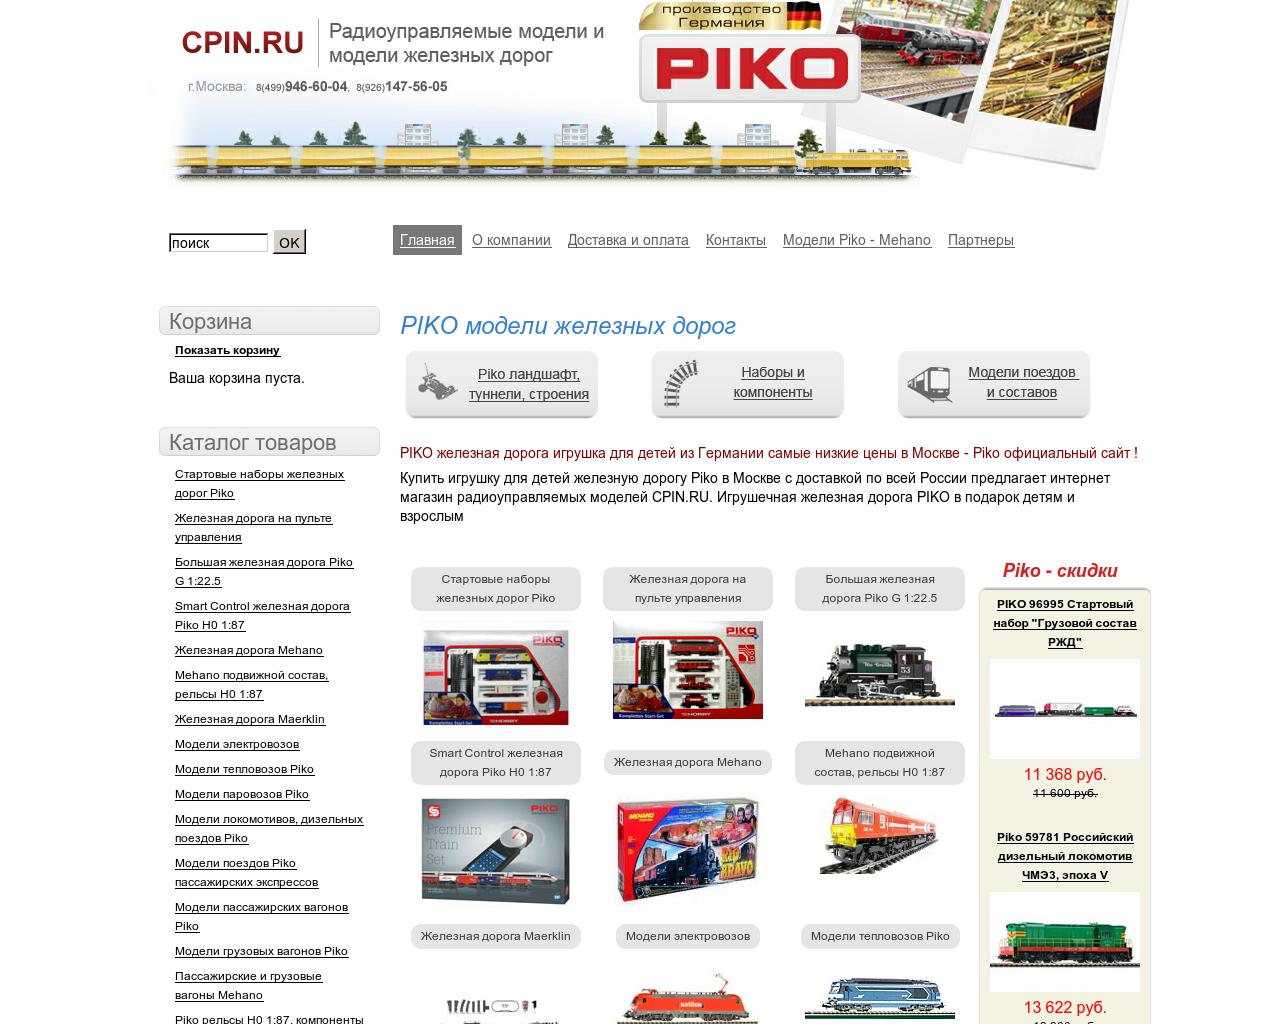 Изображение сайта cpin.ru в разрешении 1280x1024